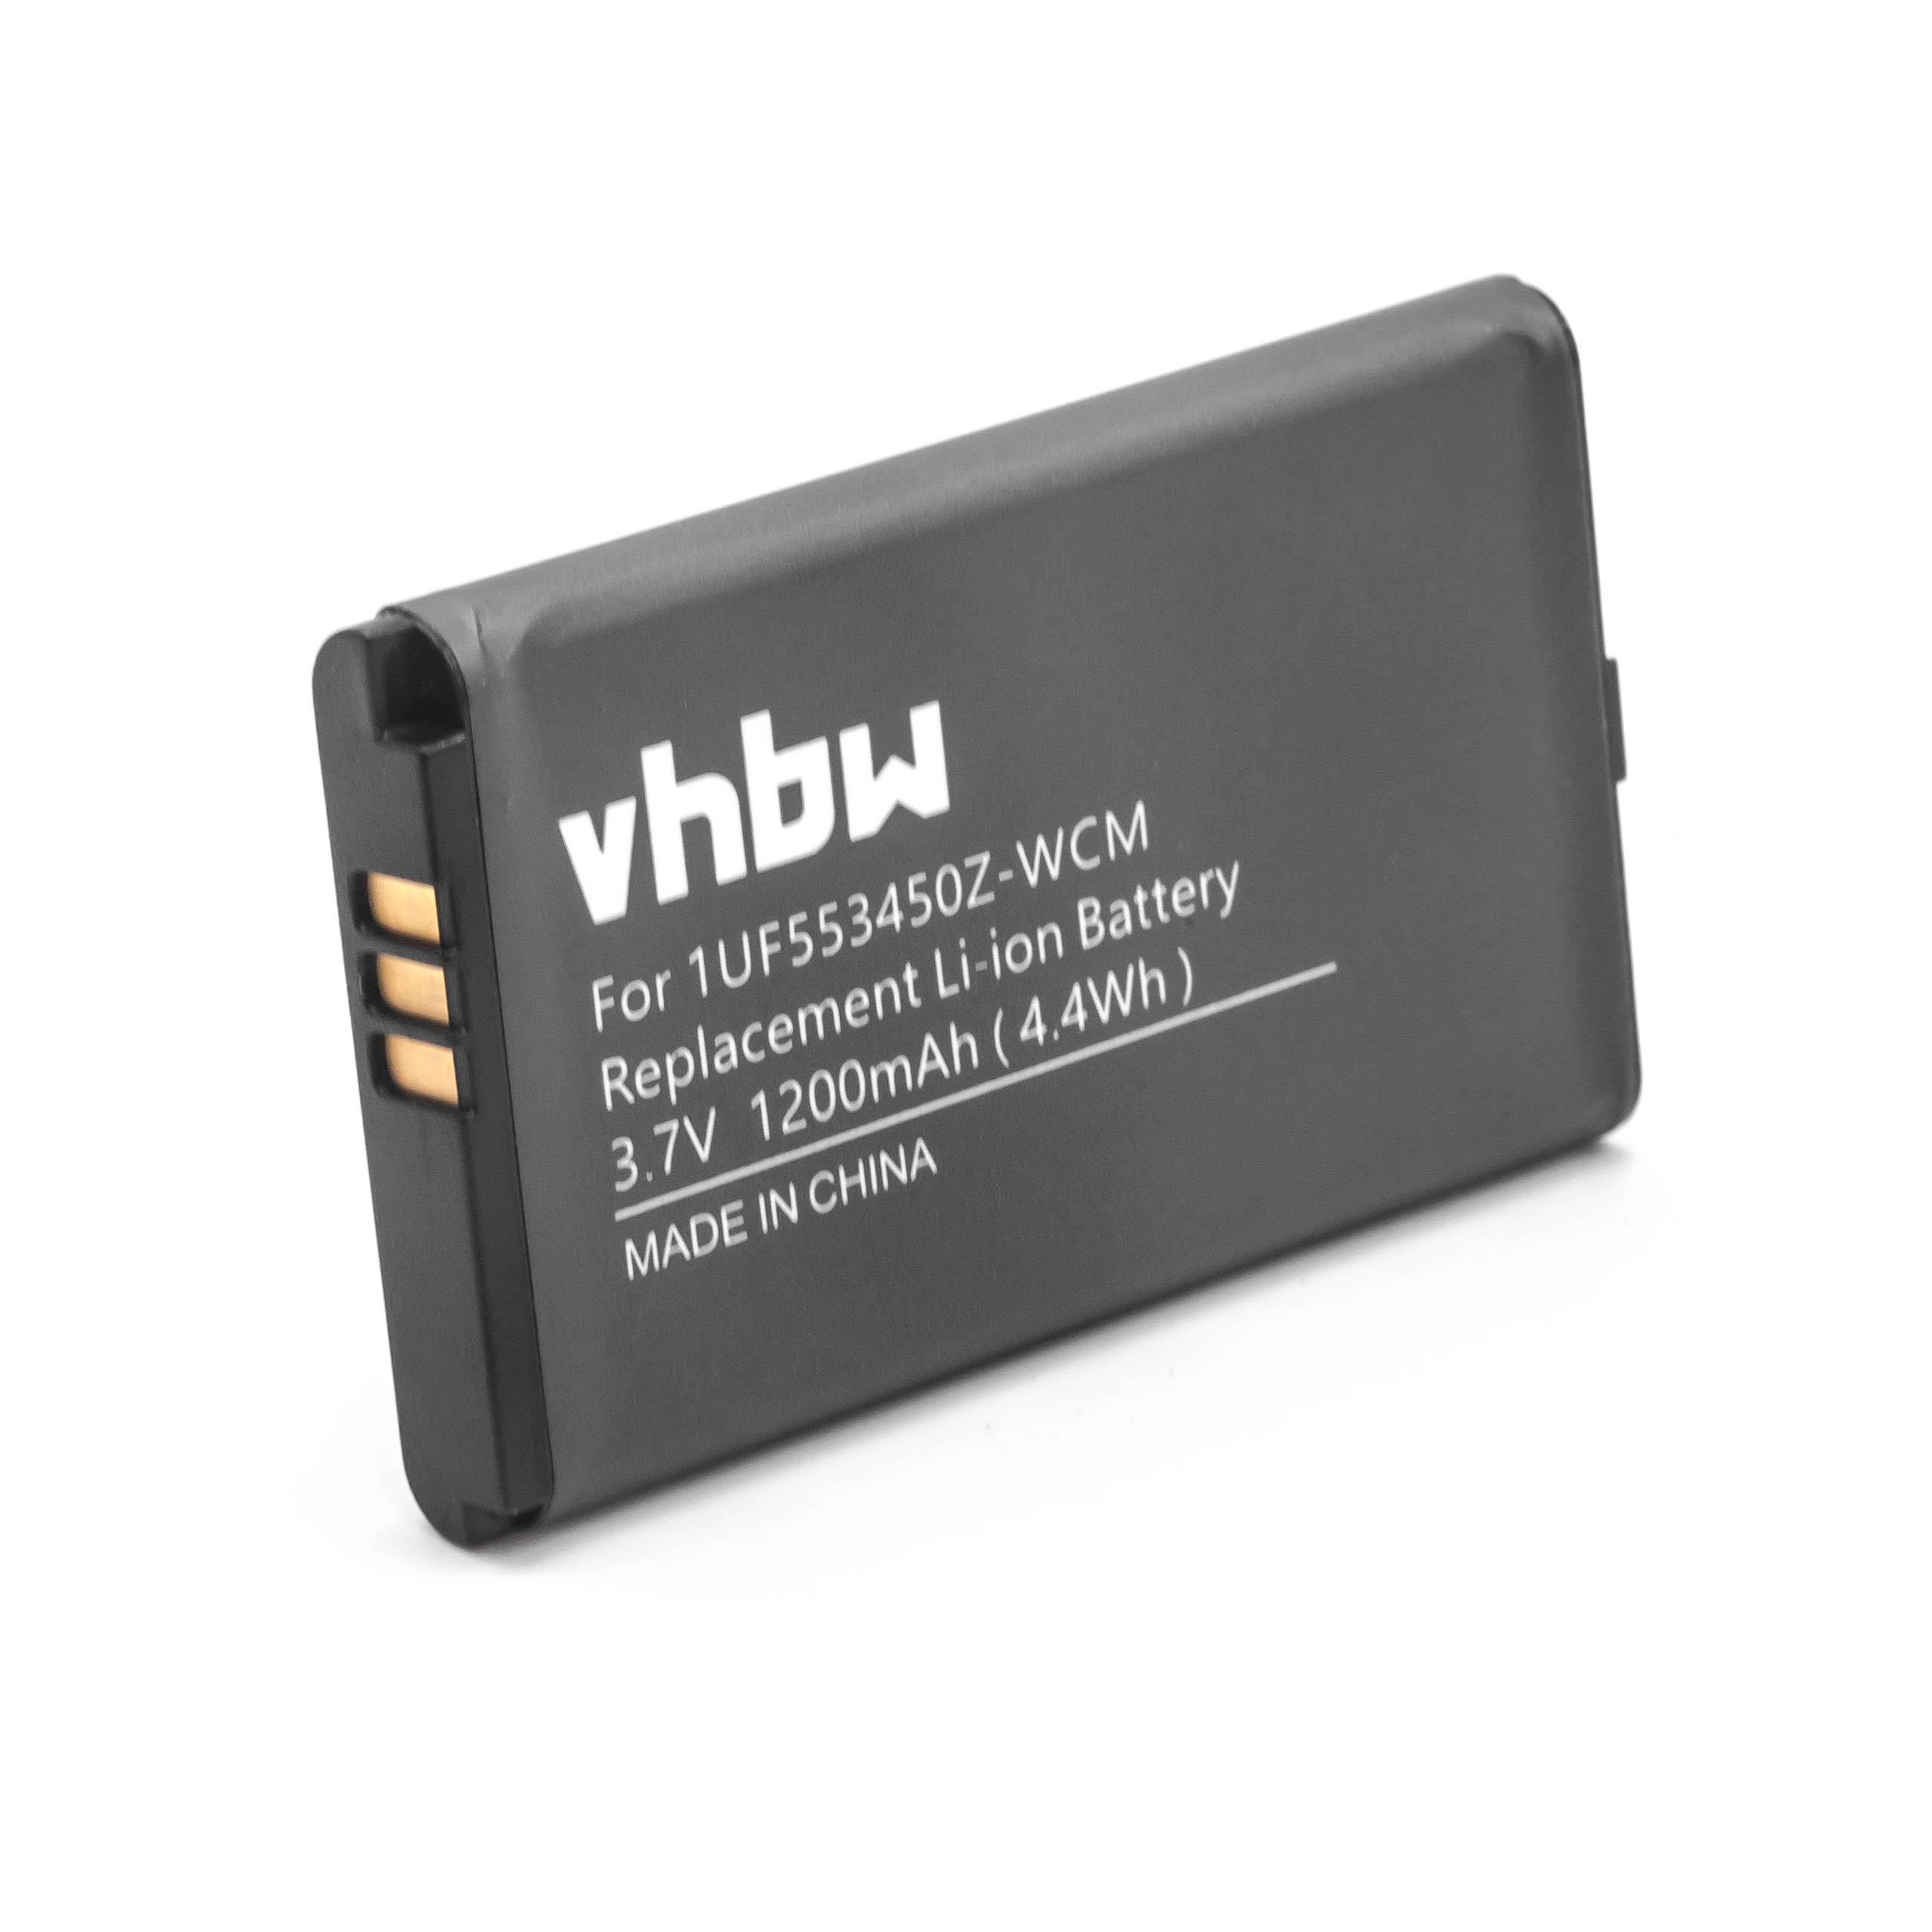 Batería reemplaza 1UF553450Z-WCM para tablet, Pad Bamboo - 1200 mAh 3,7 V Li-Ion